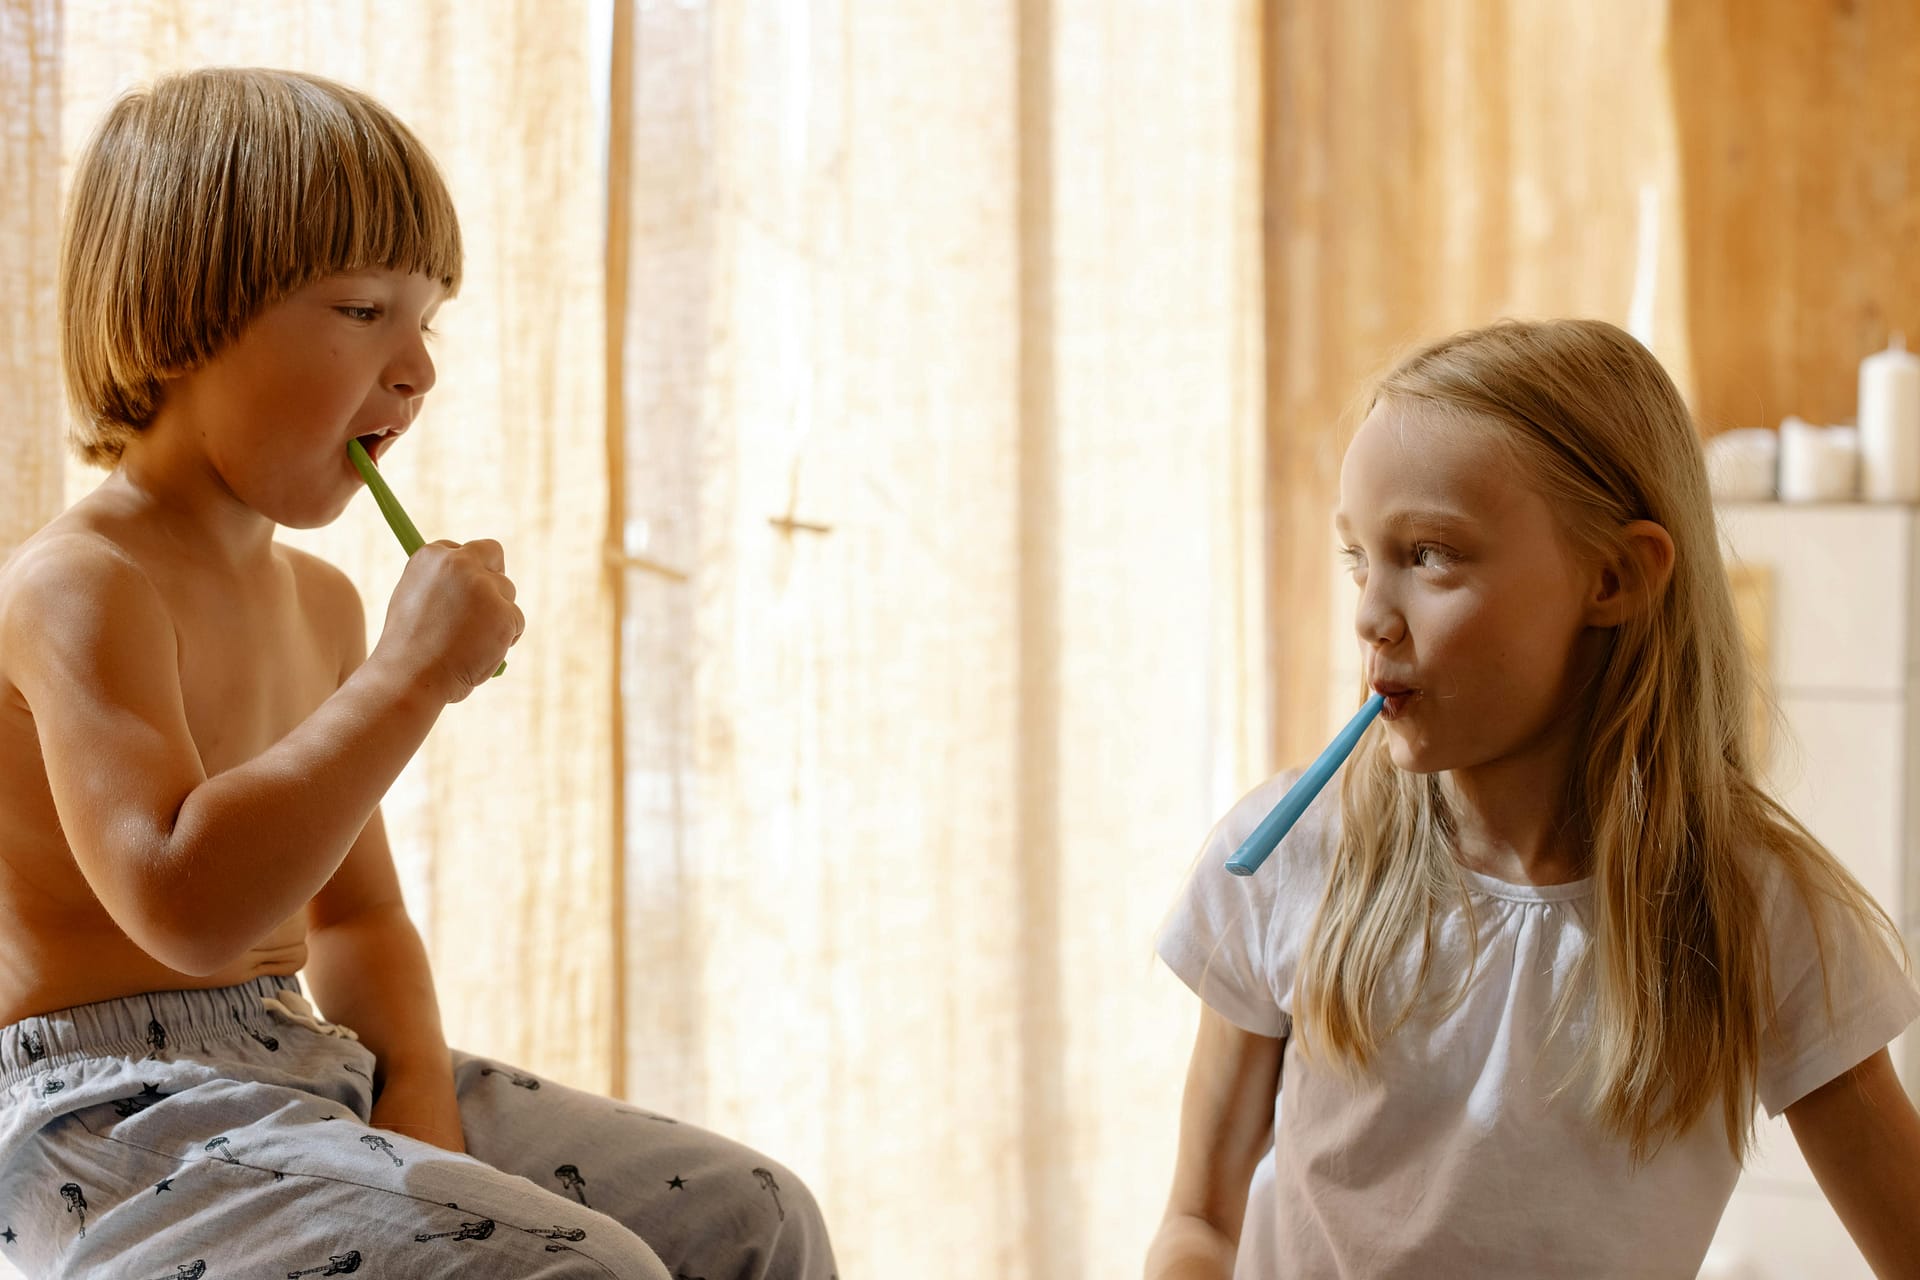 Image of children brushing teeth. The perils of fluoride